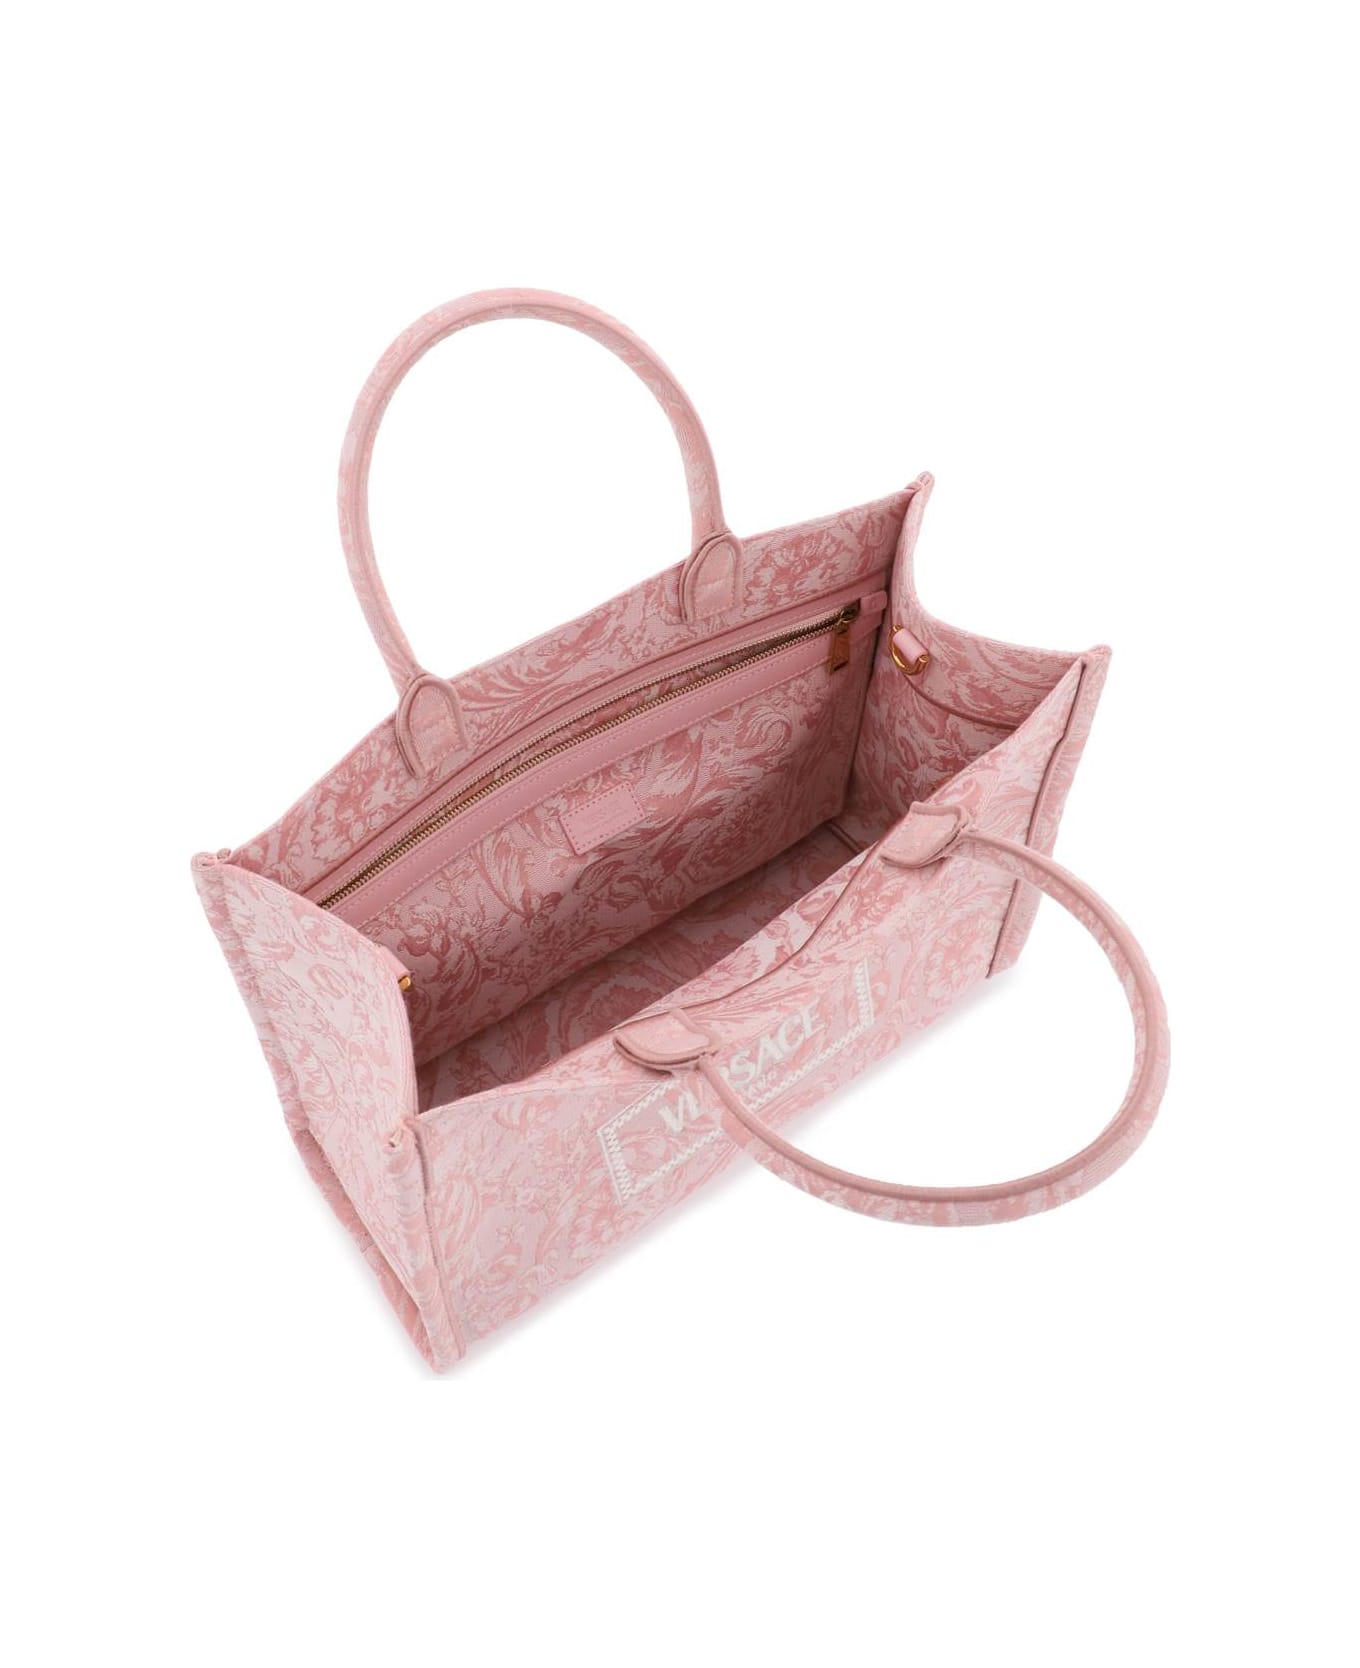 Versace Athena Handbag - Pale Pink-english Rose-ve トートバッグ